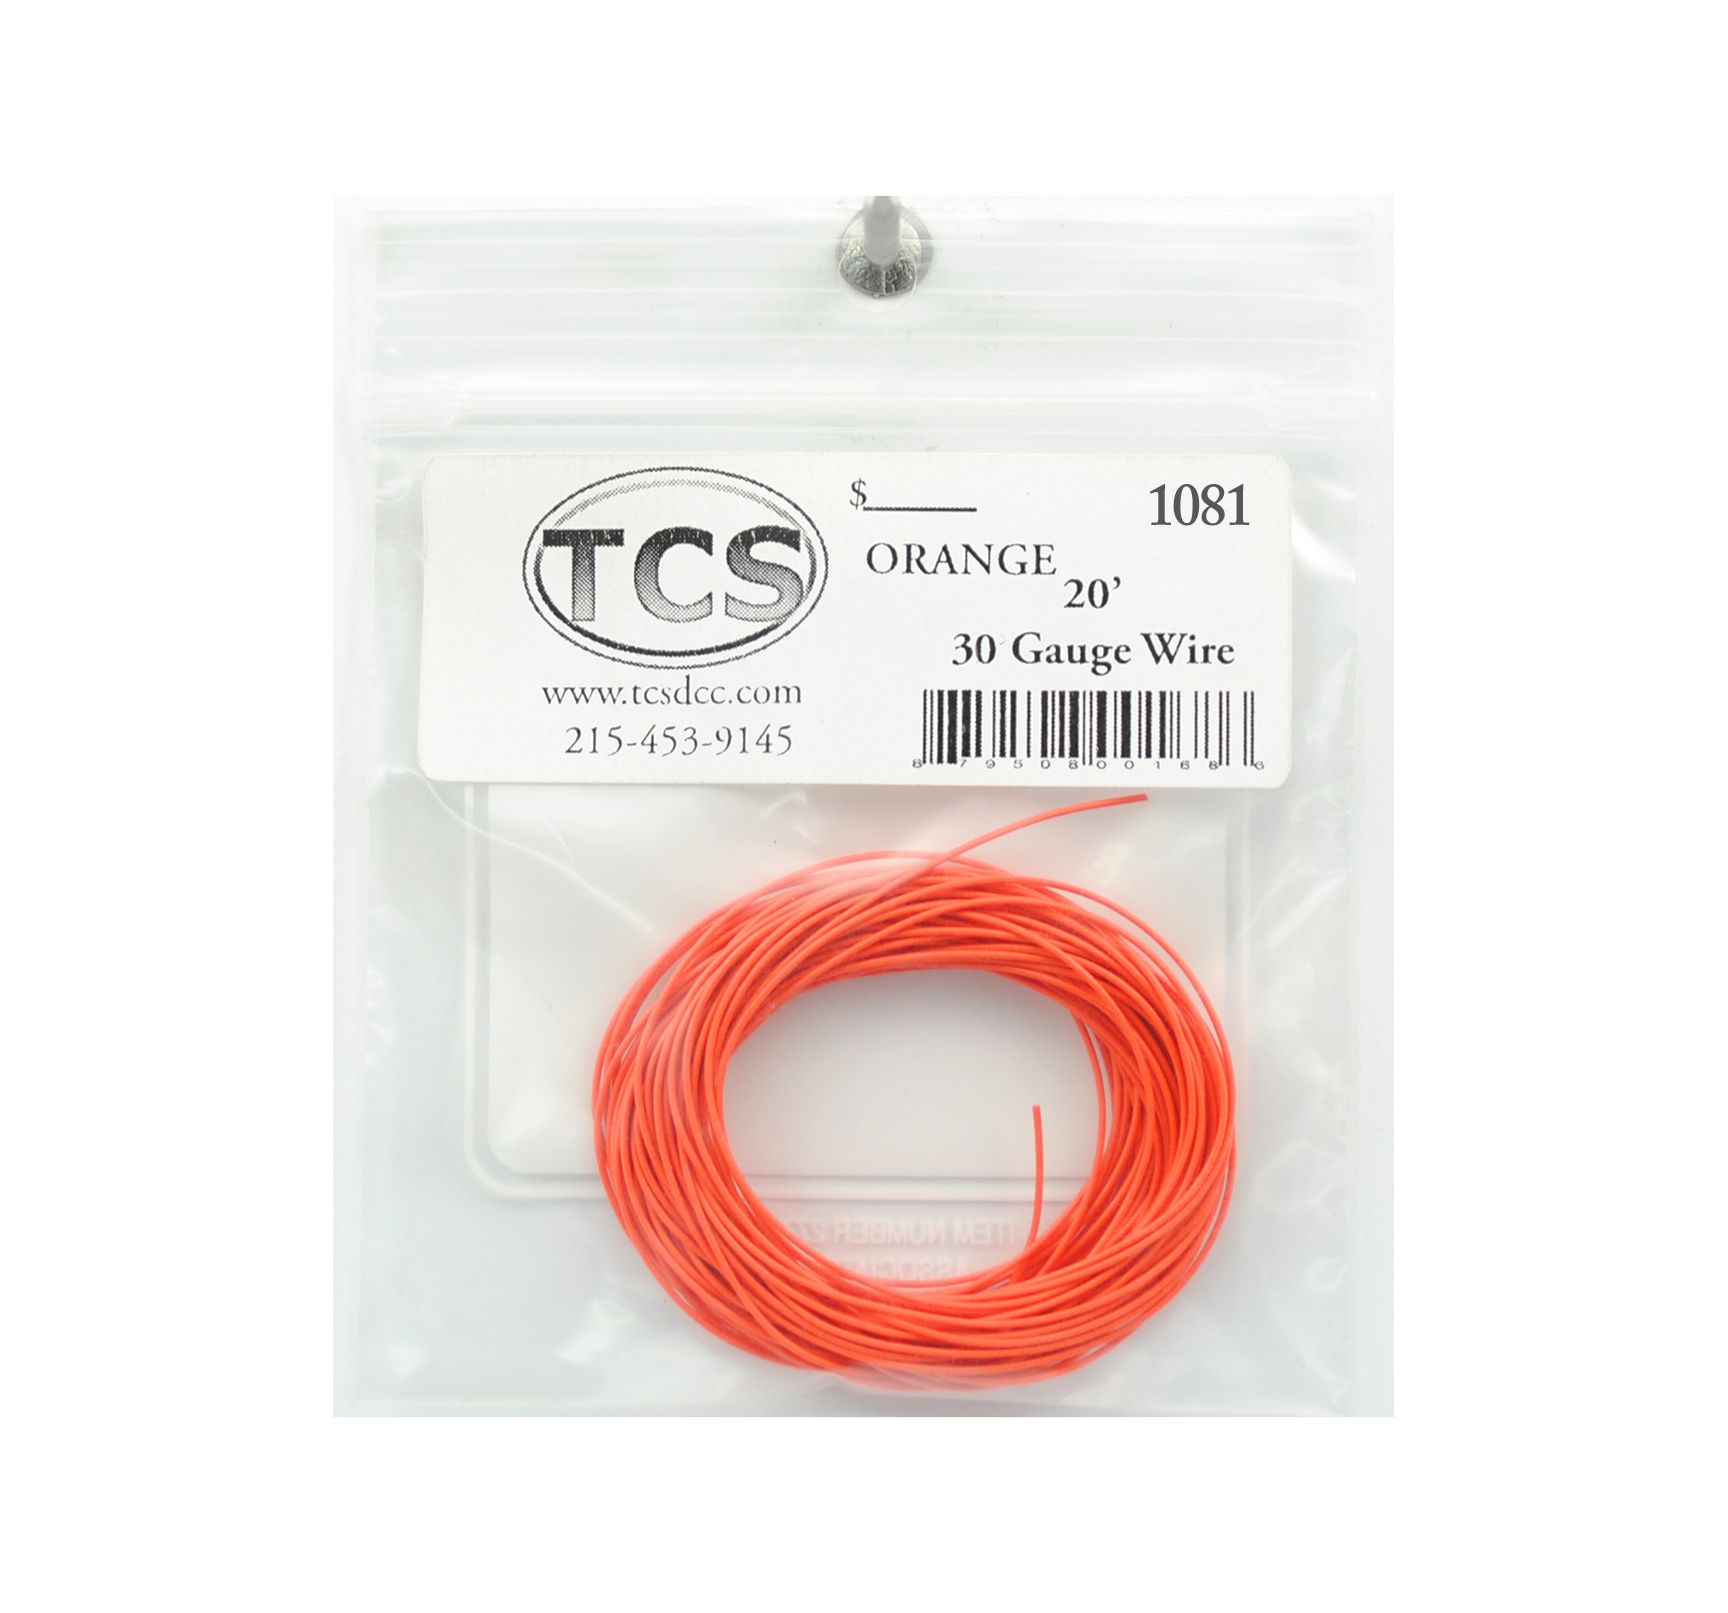 TCS 1081 30 Gauge Wire, 20 ft, Orange